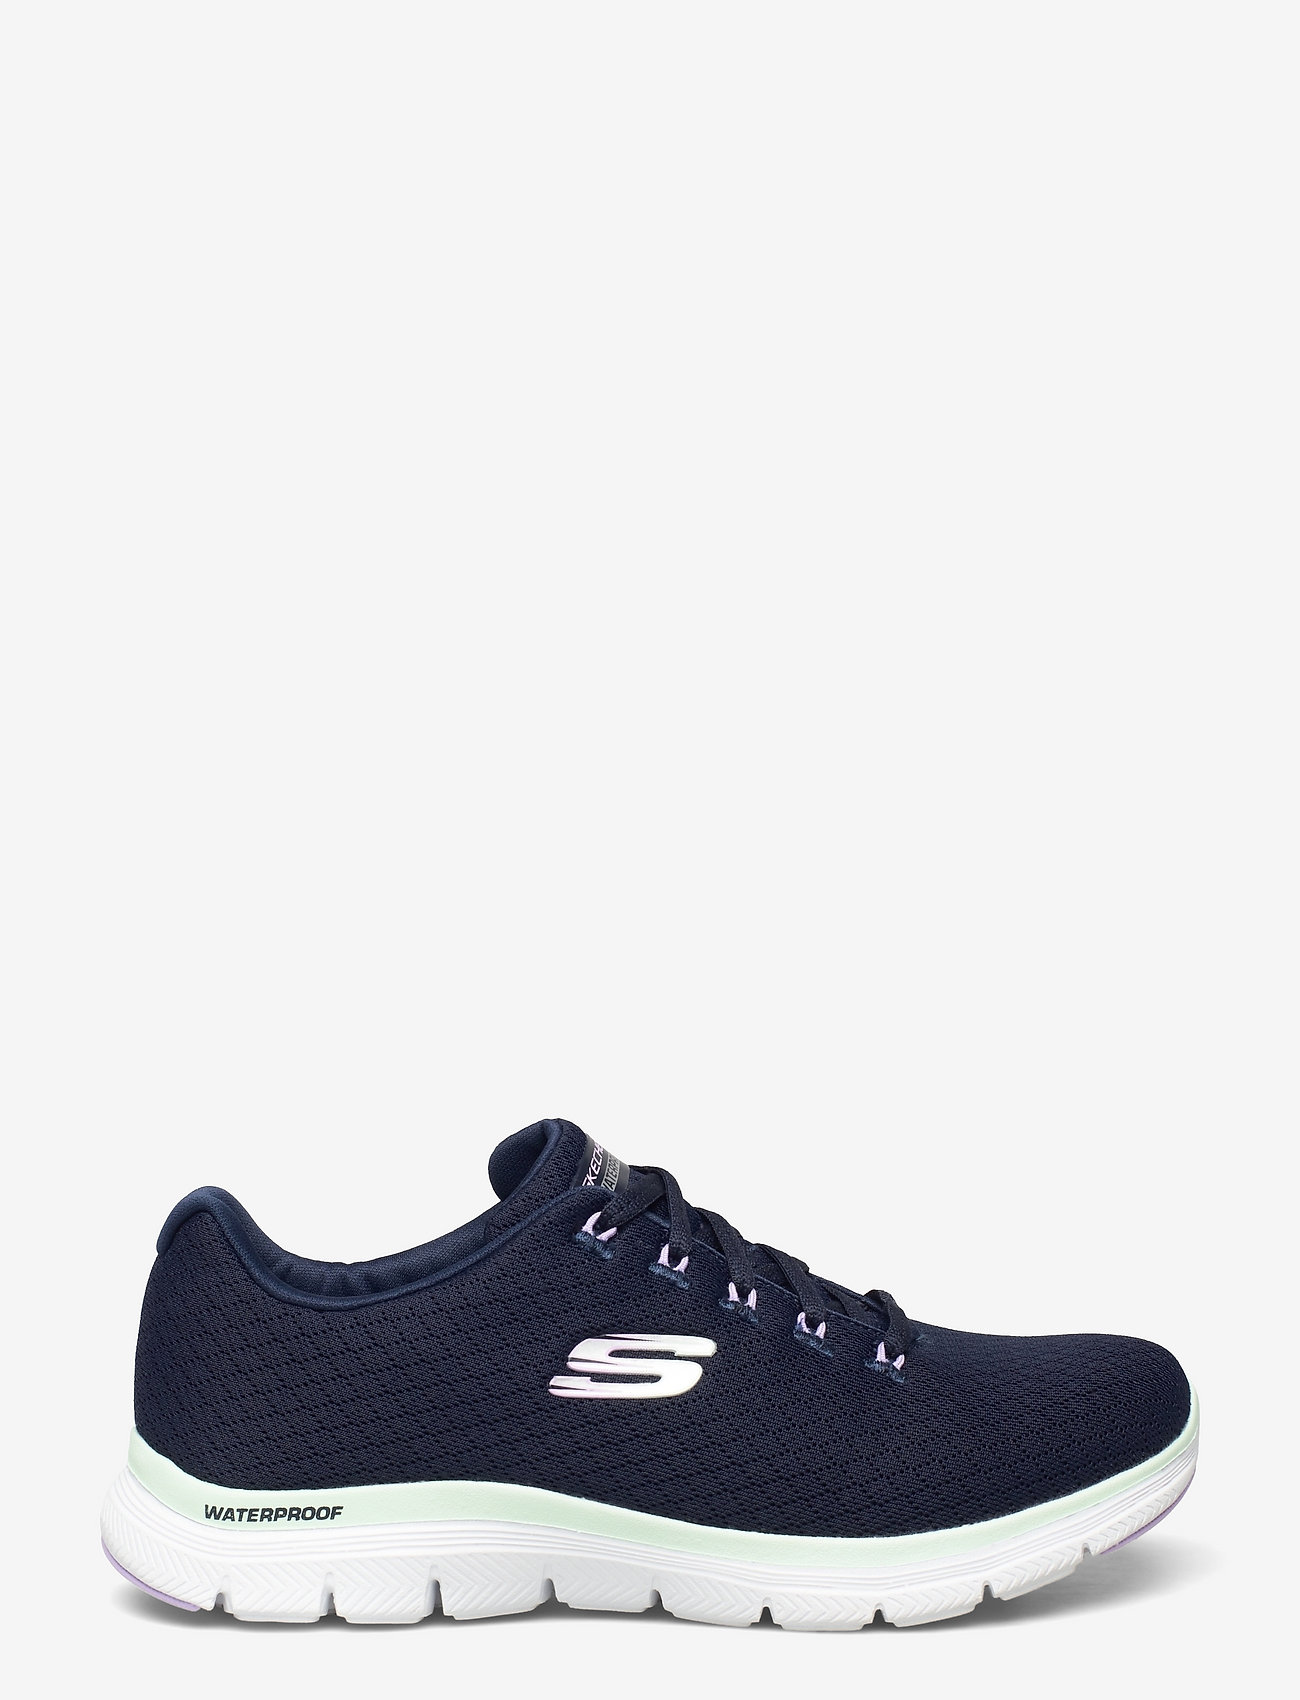 Skechers - Womens Flex Appeal 4.0 - Waterproof - låga sneakers - nvaq navy aqua - 1